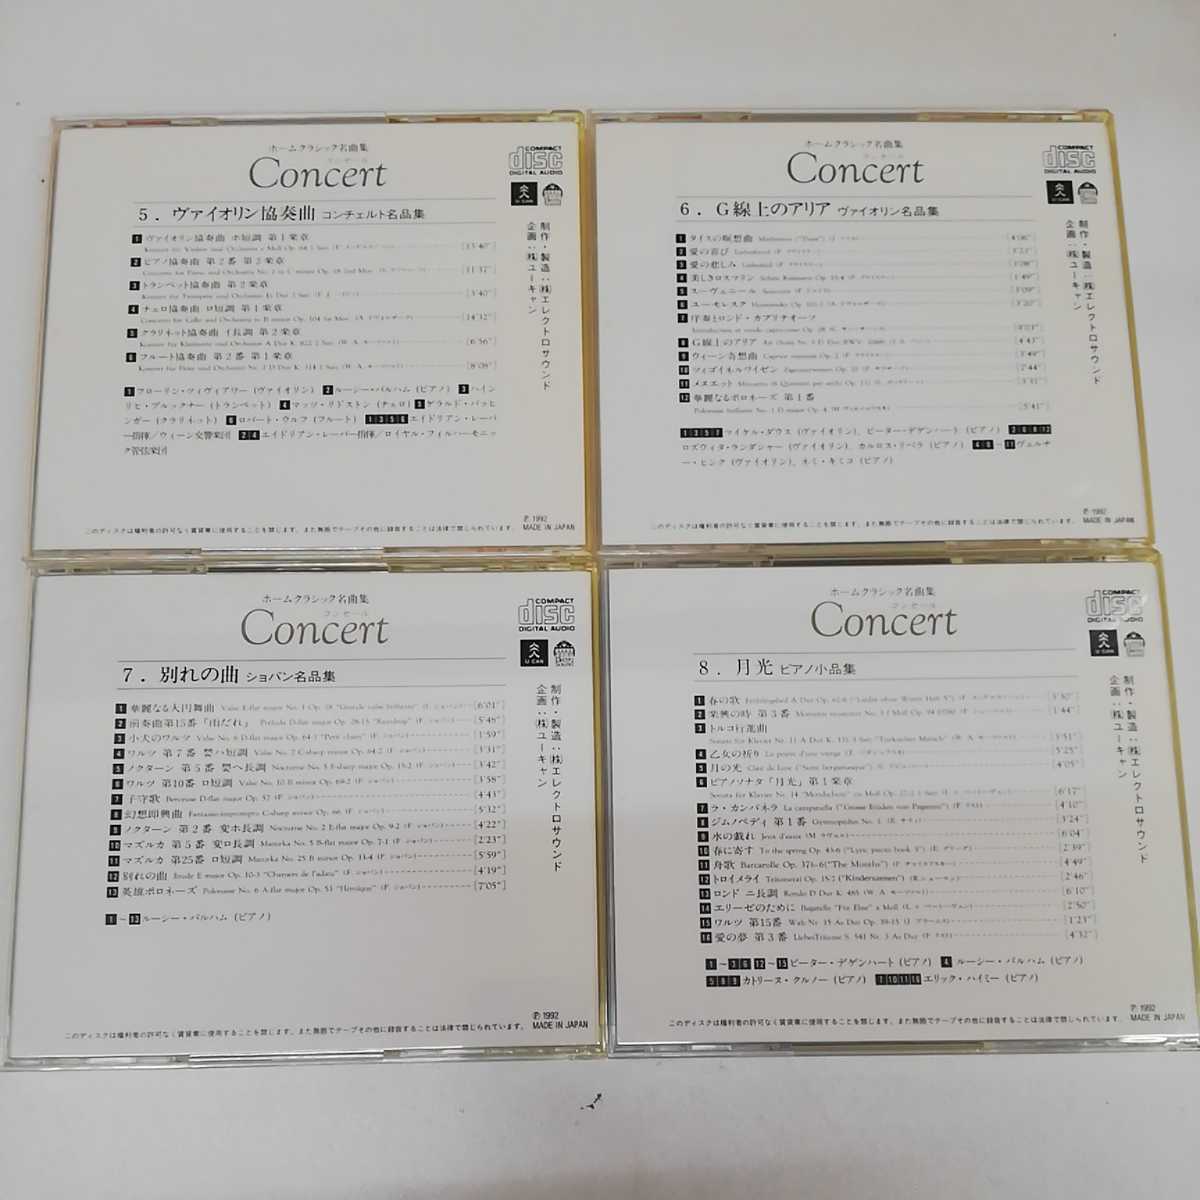 CD 全12巻 ホームクラシック名曲集 コンセール Concert OCD-12011 ~ 12012 14巻セット クラシック 大全集 ユーキャン  交響曲 バレエ音楽